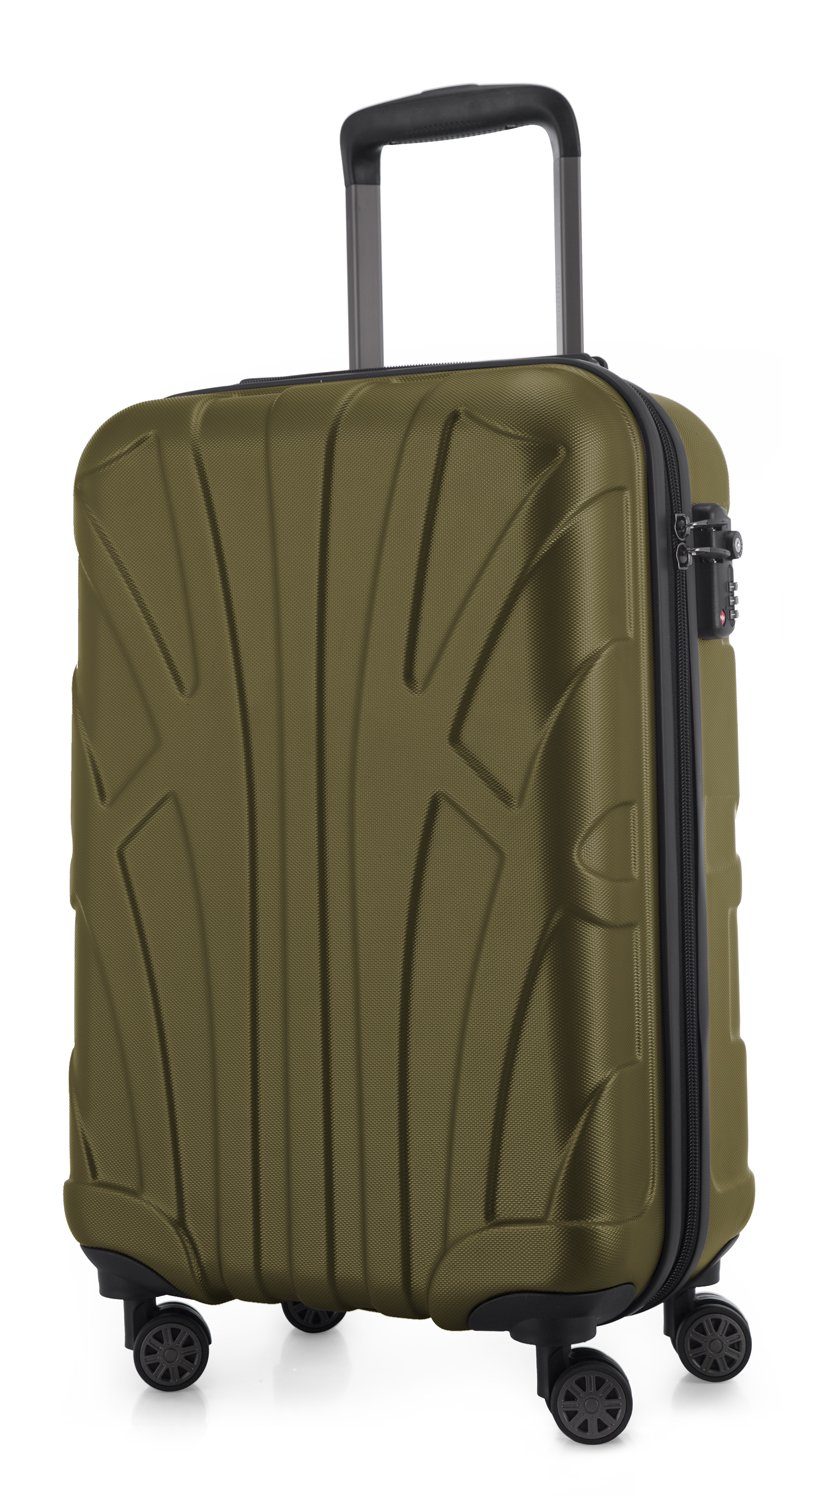 Grün Leicht, Robust, Handgepäckkoffer TSA 4 55 Packvolumen L S1, Rollen, Zahlenschloss, Suitline cm, 33